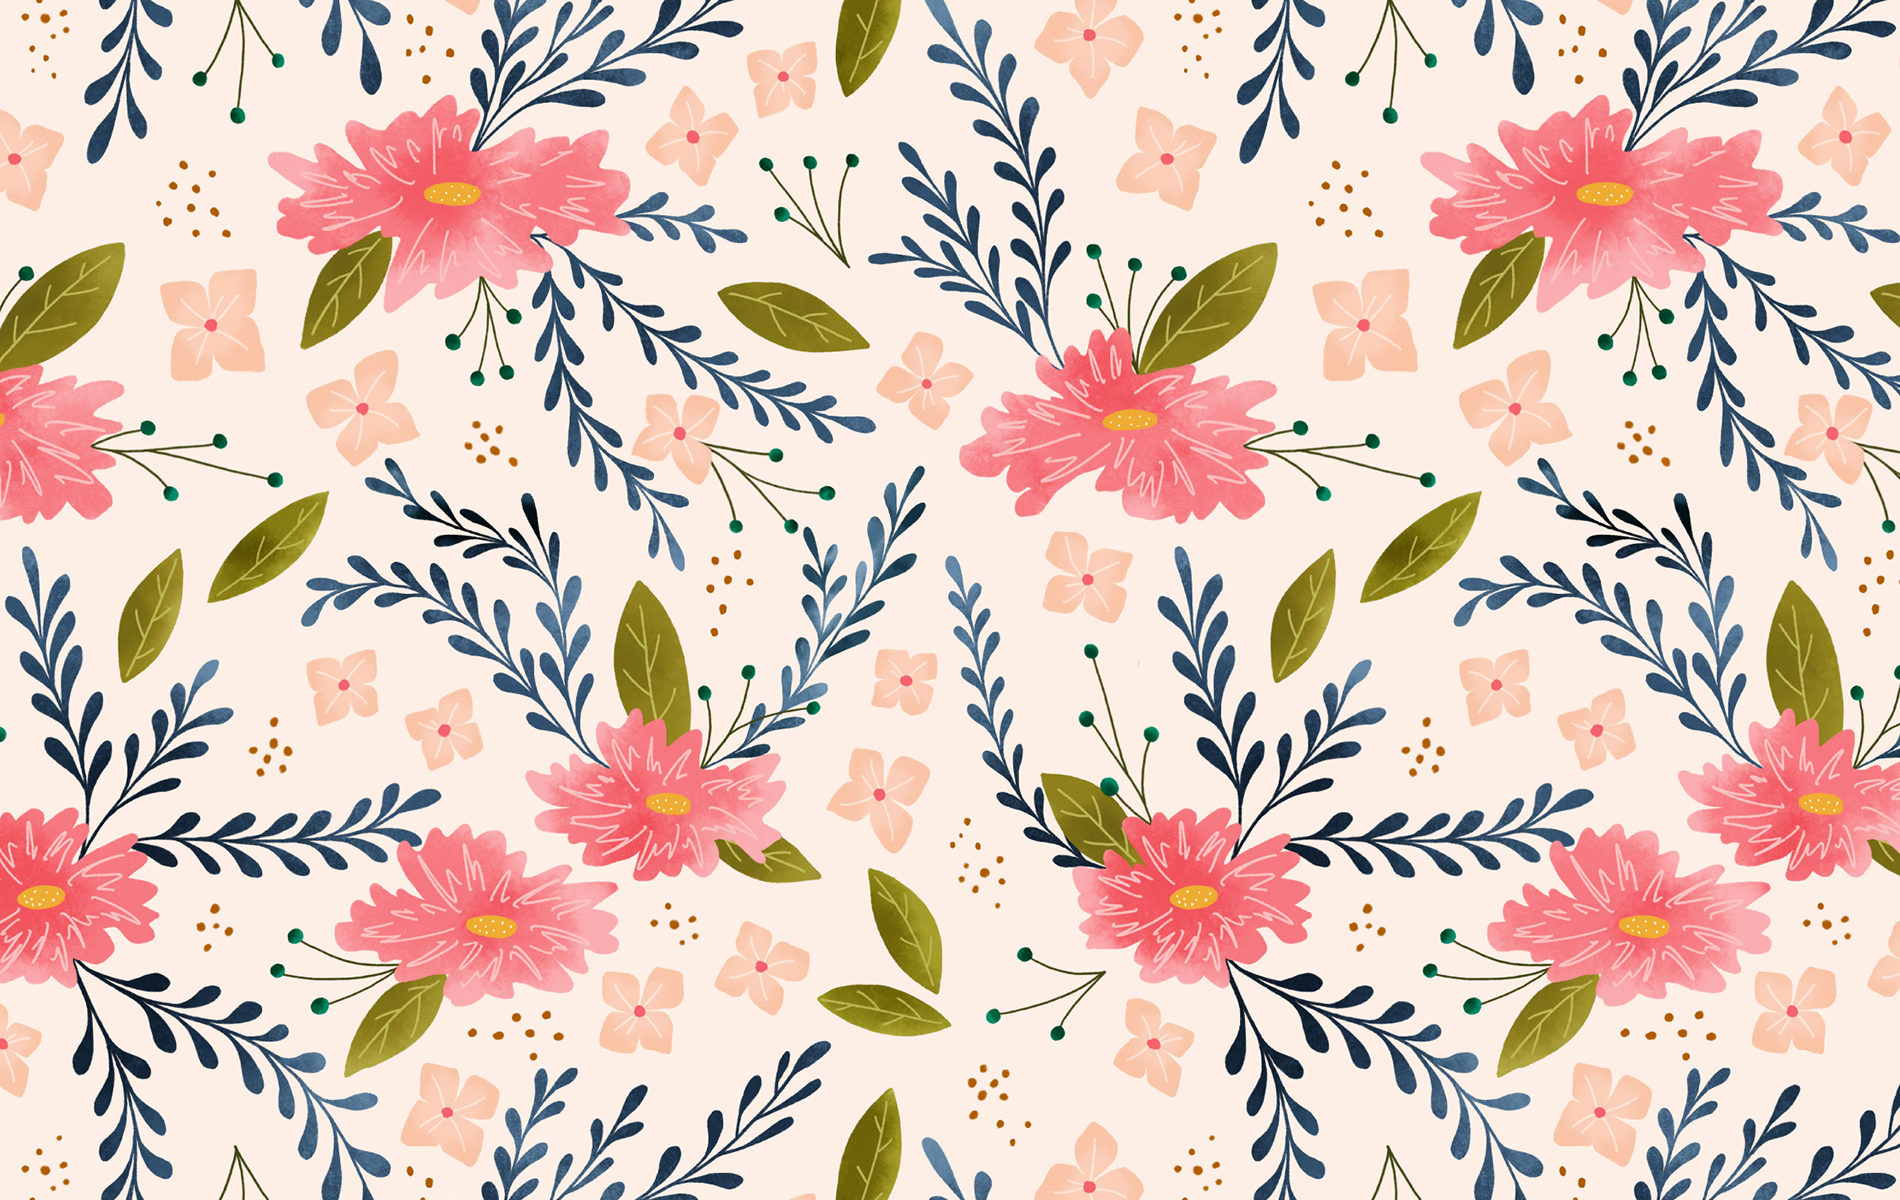 Floral Desktop Wallpapers